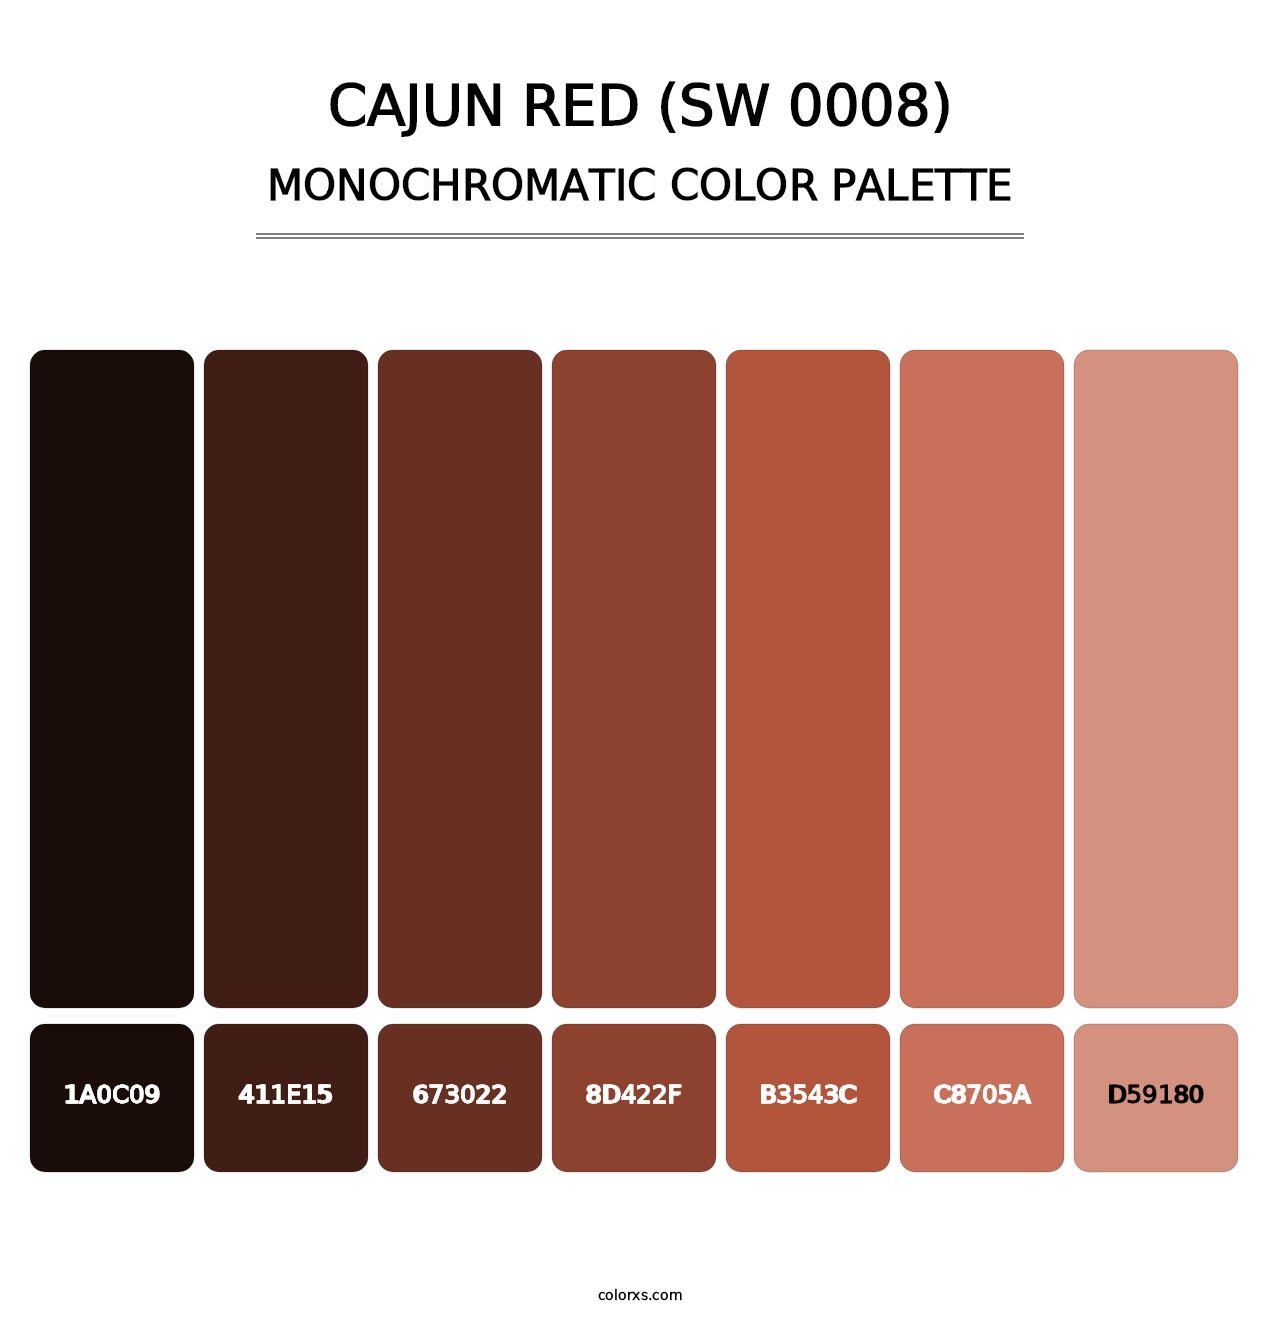 Cajun Red (SW 0008) - Monochromatic Color Palette